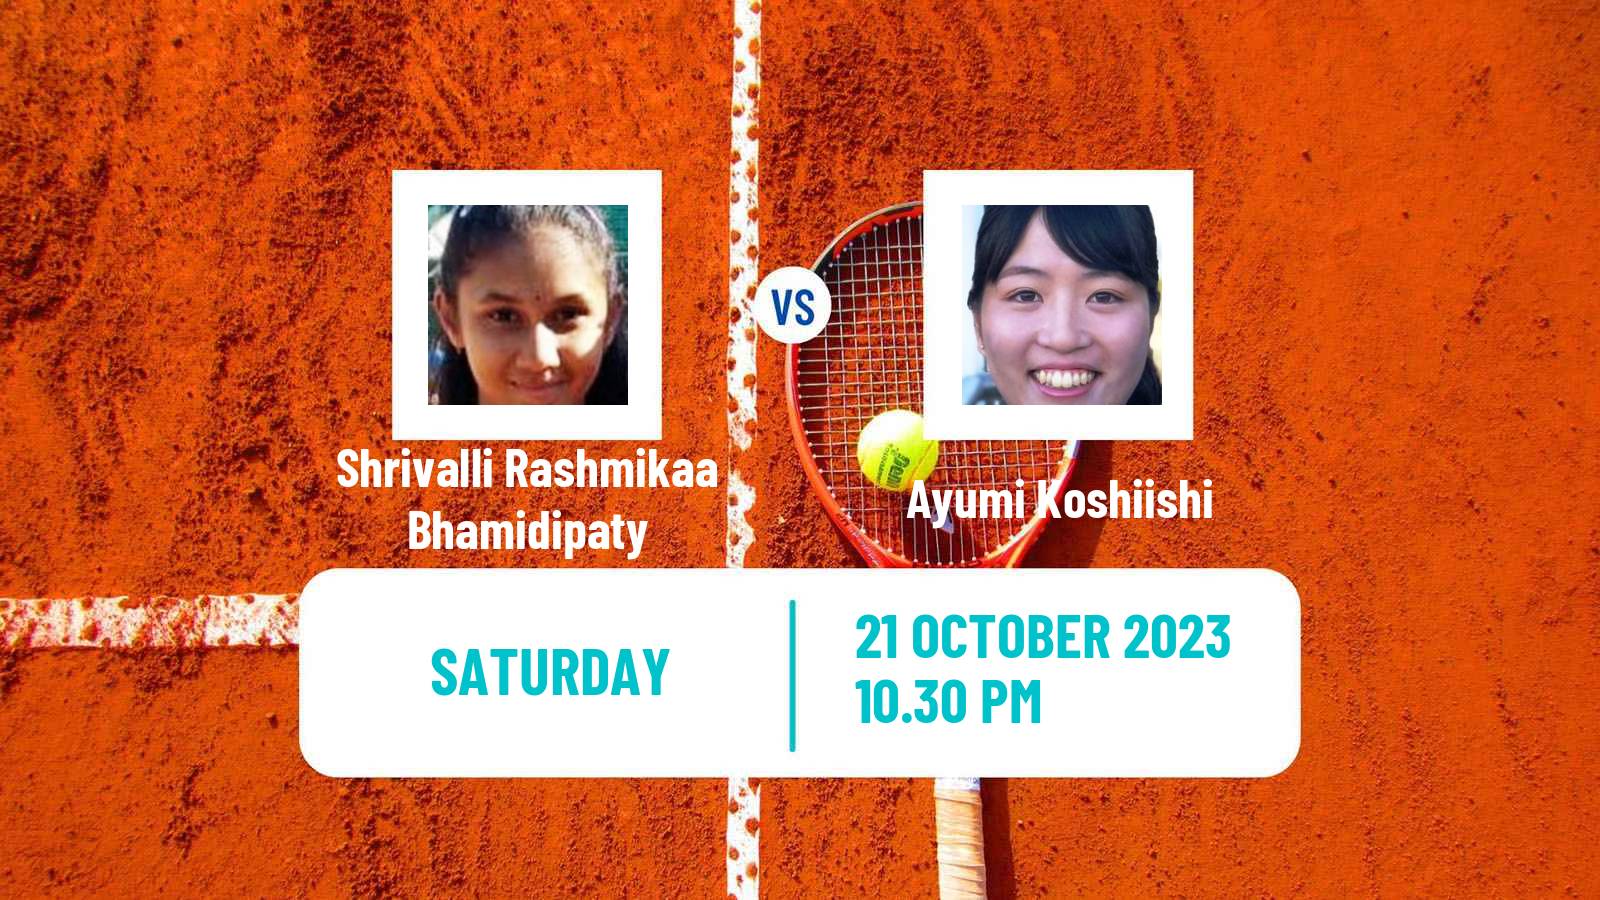 Tennis ITF W15 Hua Hin 2 Women Shrivalli Rashmikaa Bhamidipaty - Ayumi Koshiishi